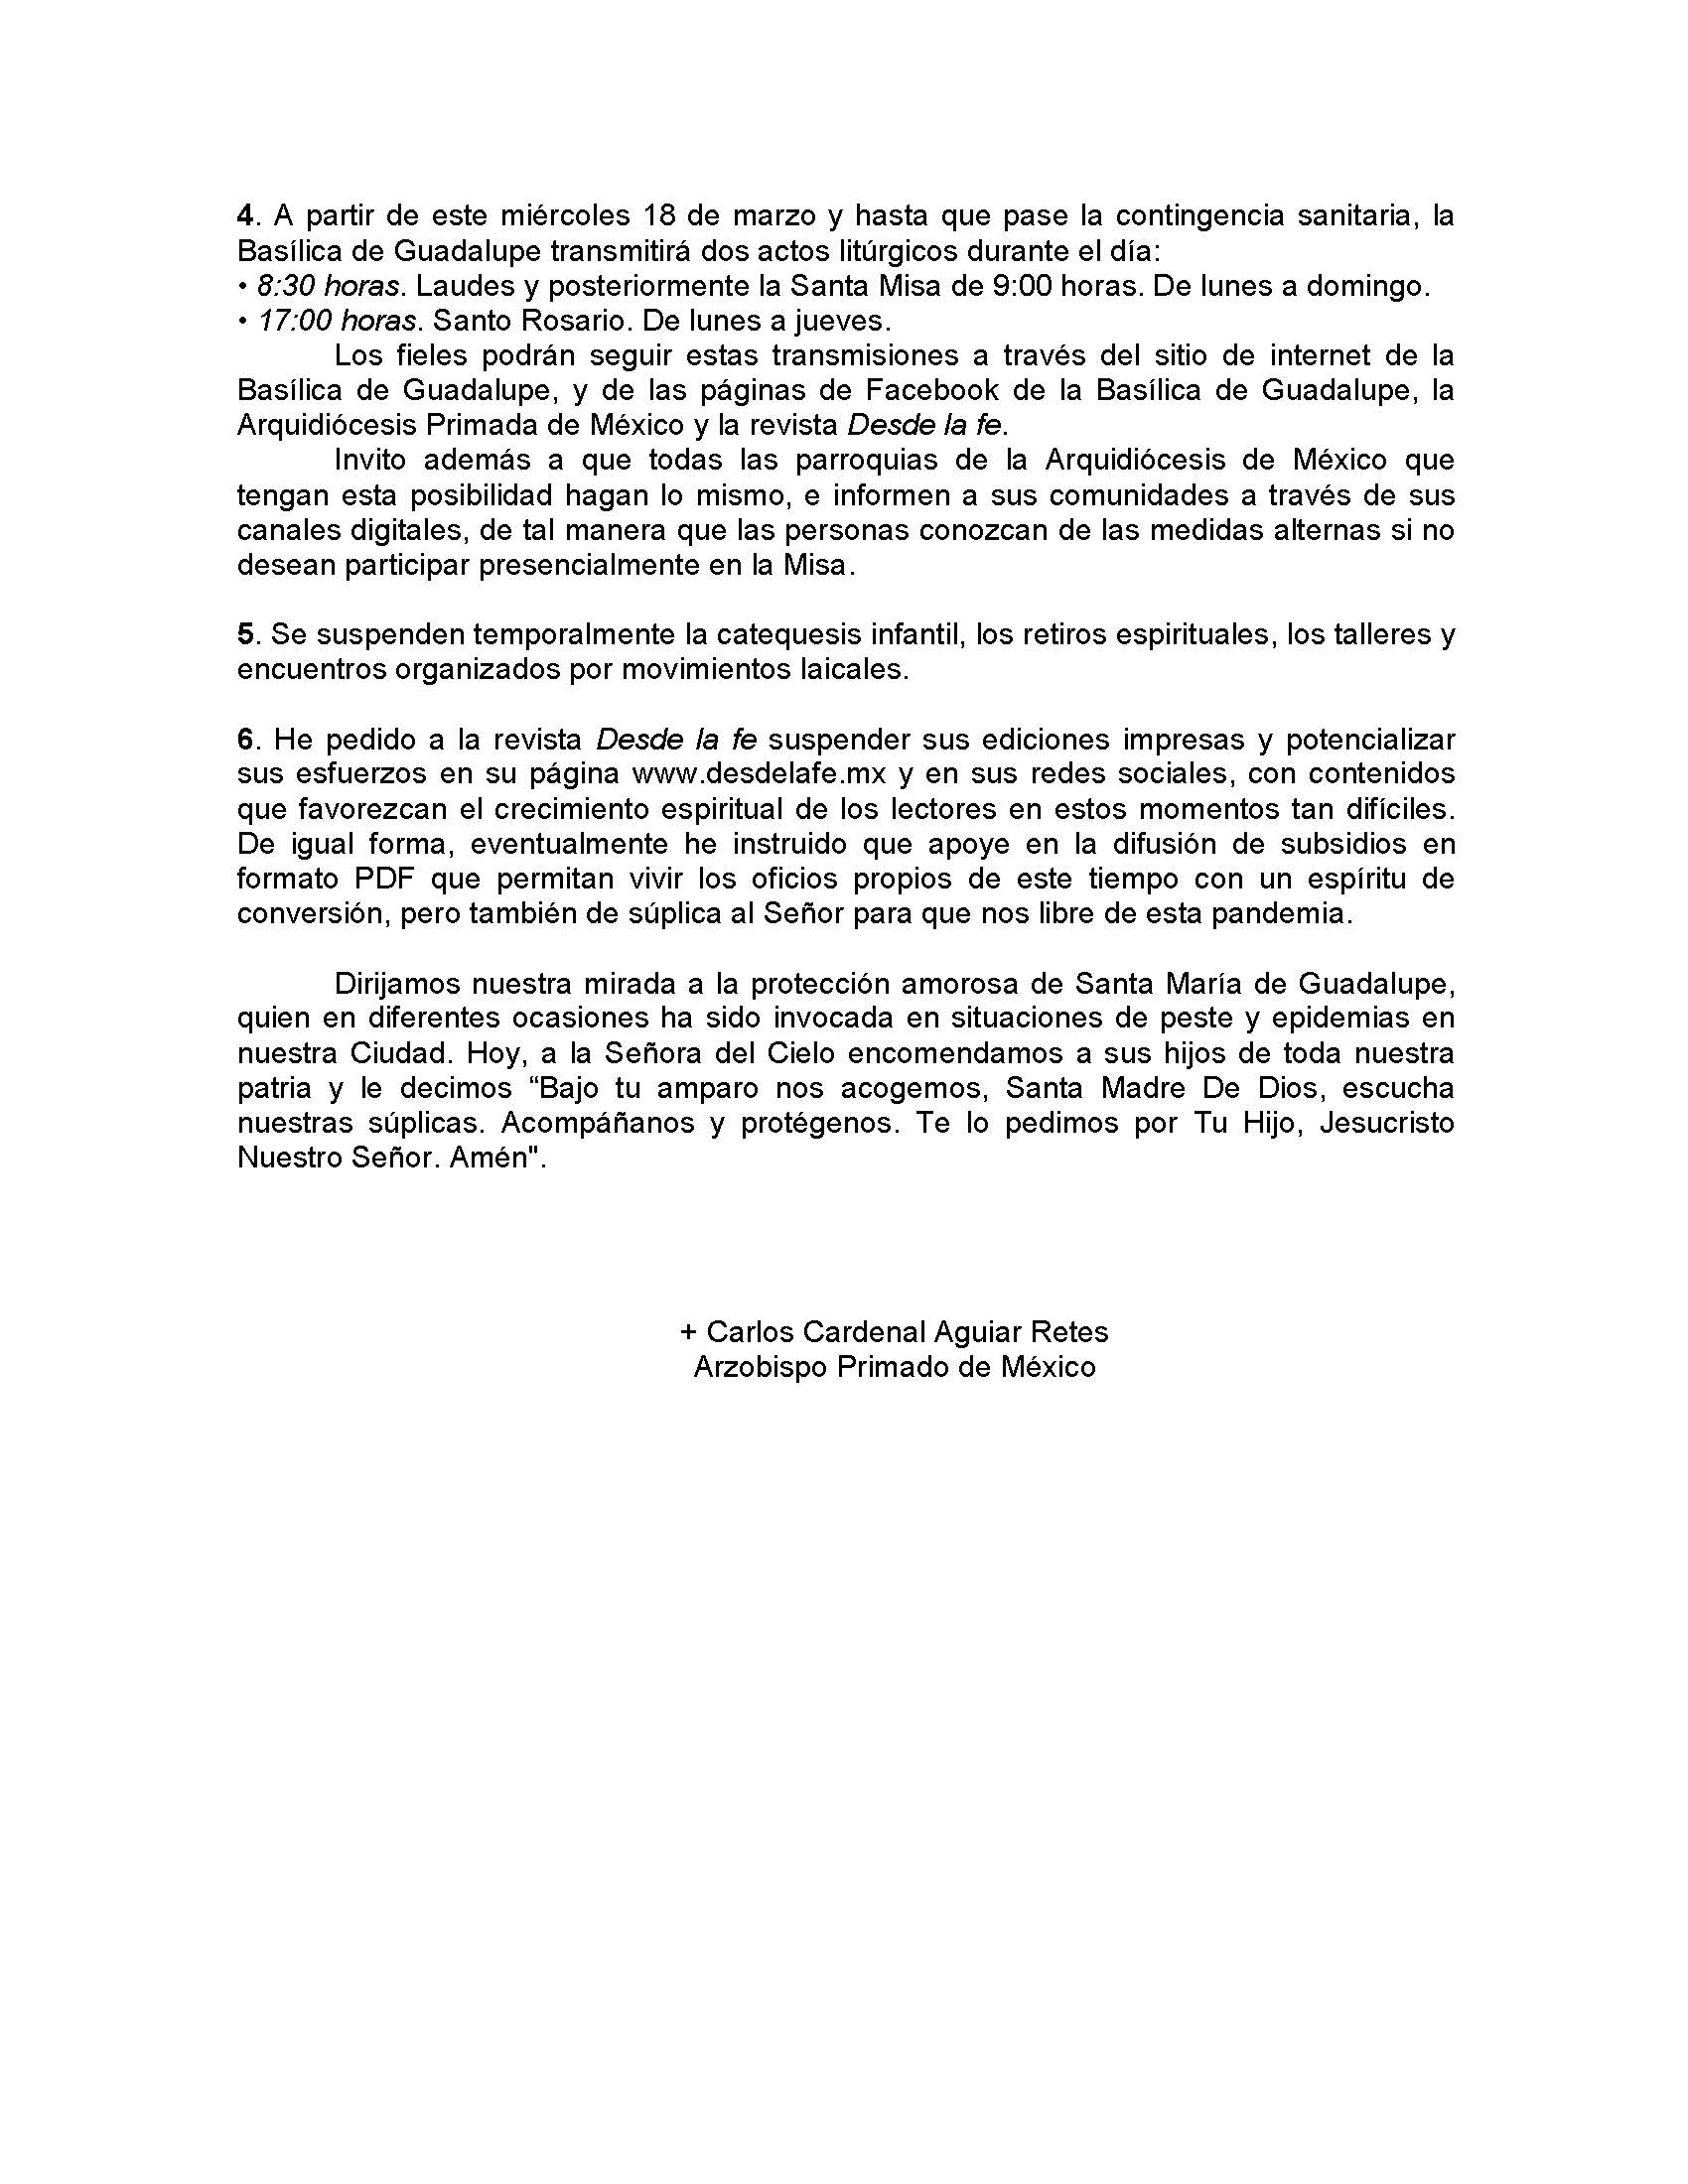 200317 Arquidiócesis Primada de México Comunicado Coronavirus Página 2